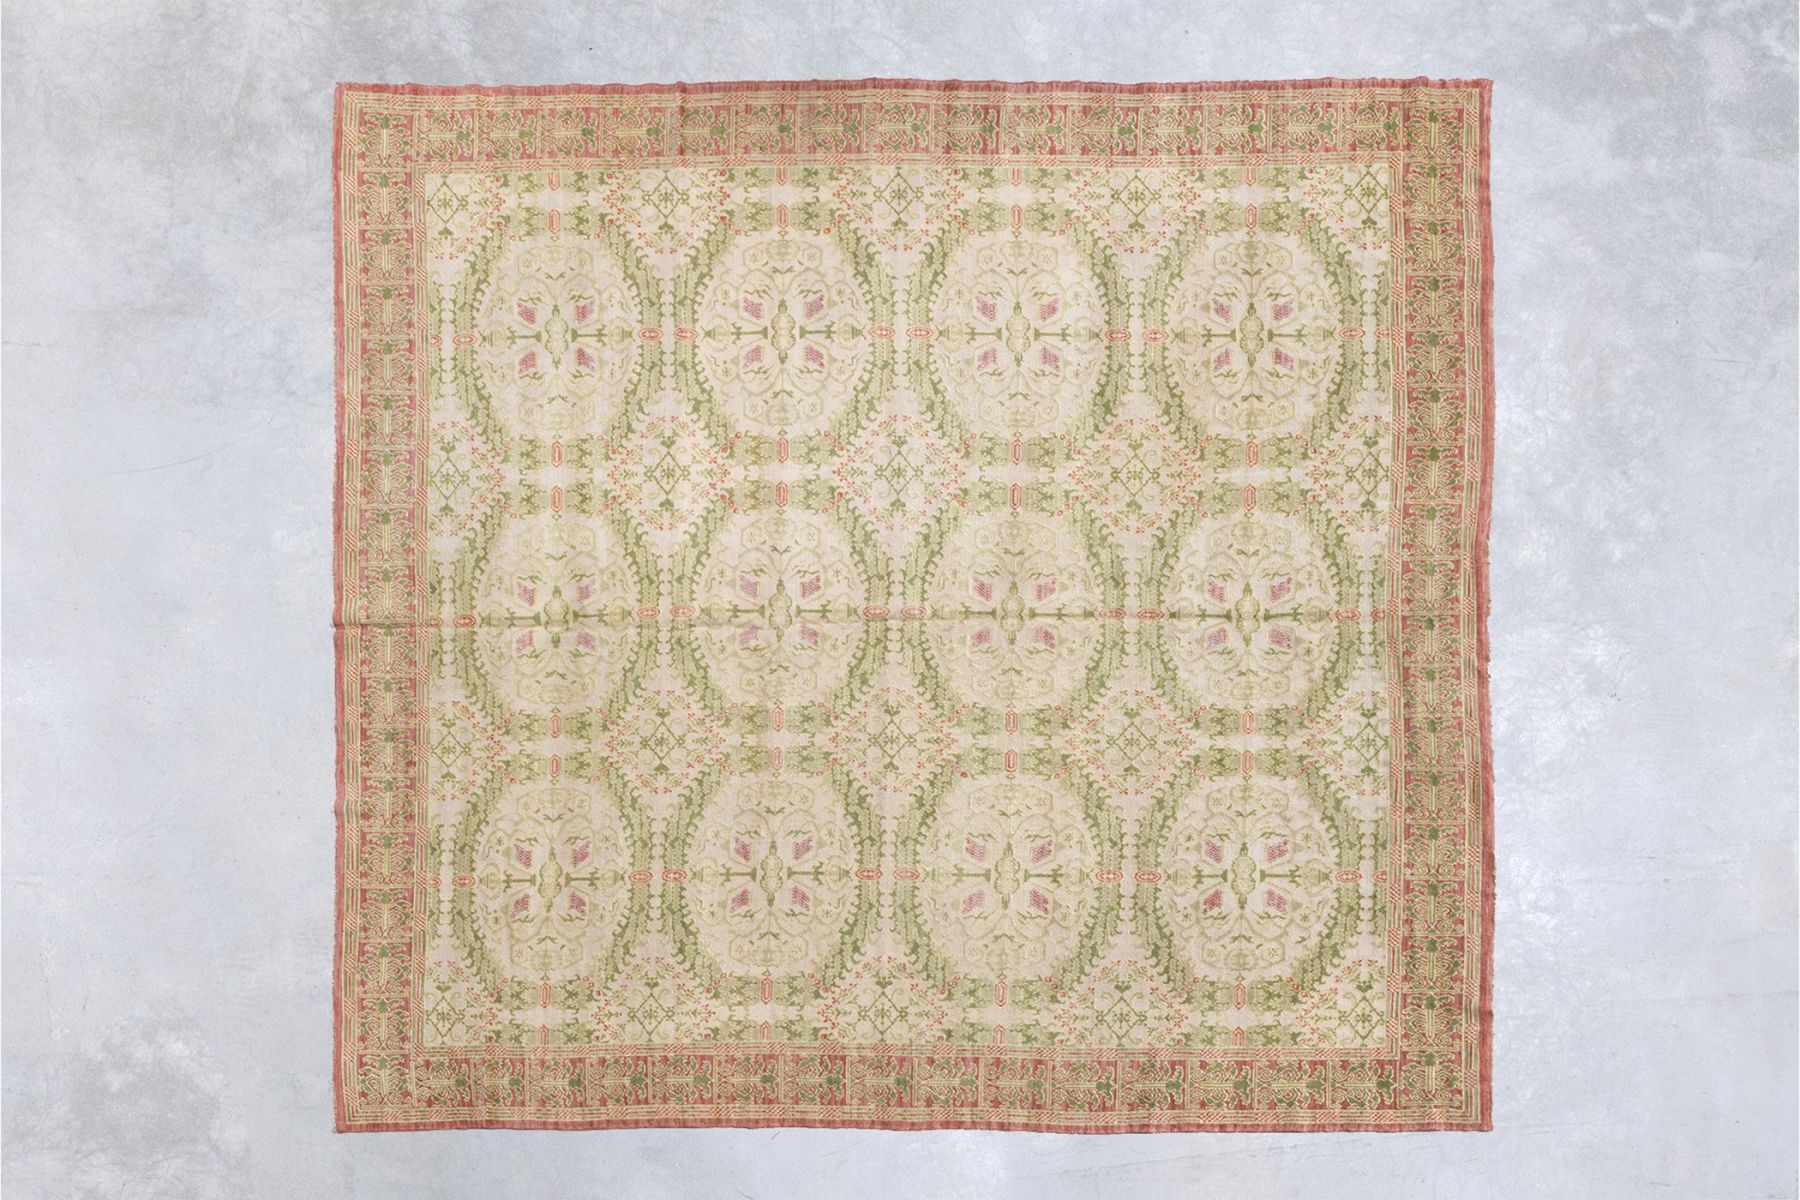 Cuenca carpet | 350 x 353 cm Antique carpets - Spain  pic-1